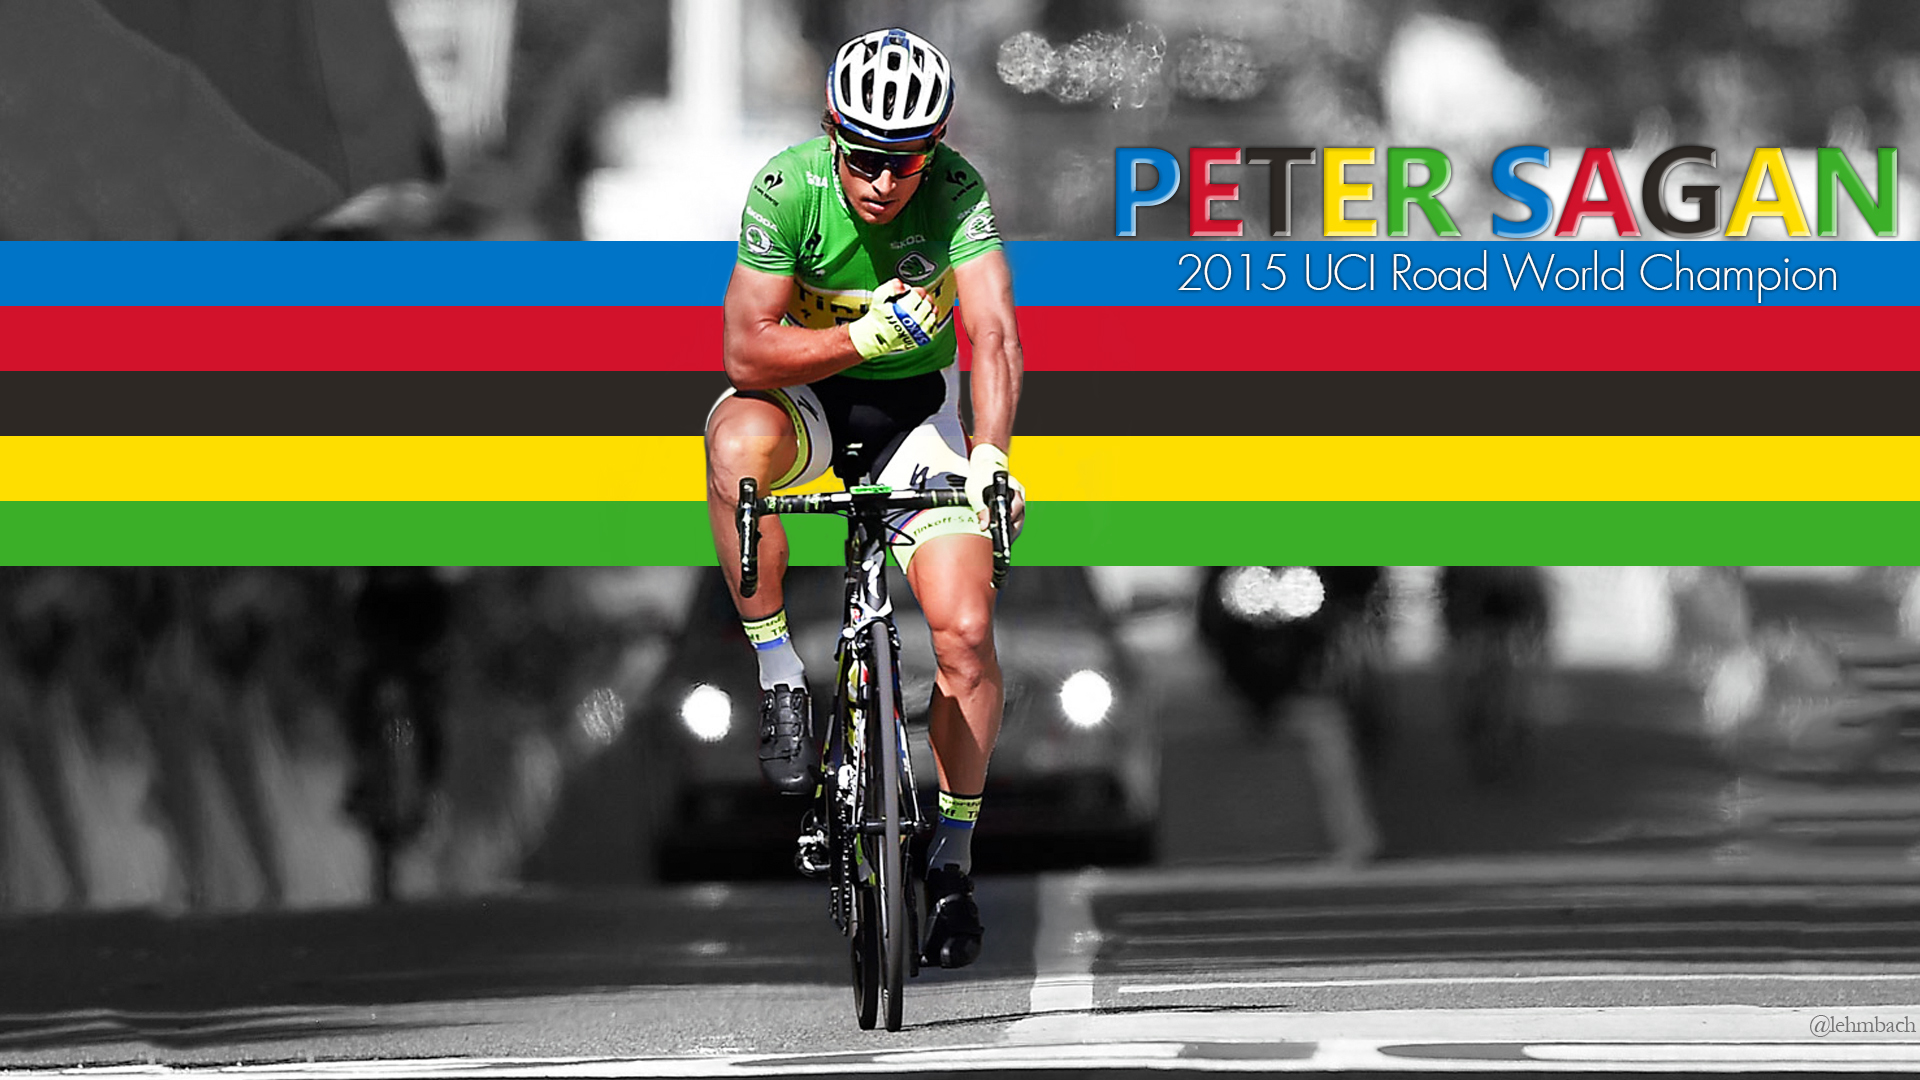 2015 Uci World Road Champion - Peter Sagan Wallpaper Hd , HD Wallpaper & Backgrounds